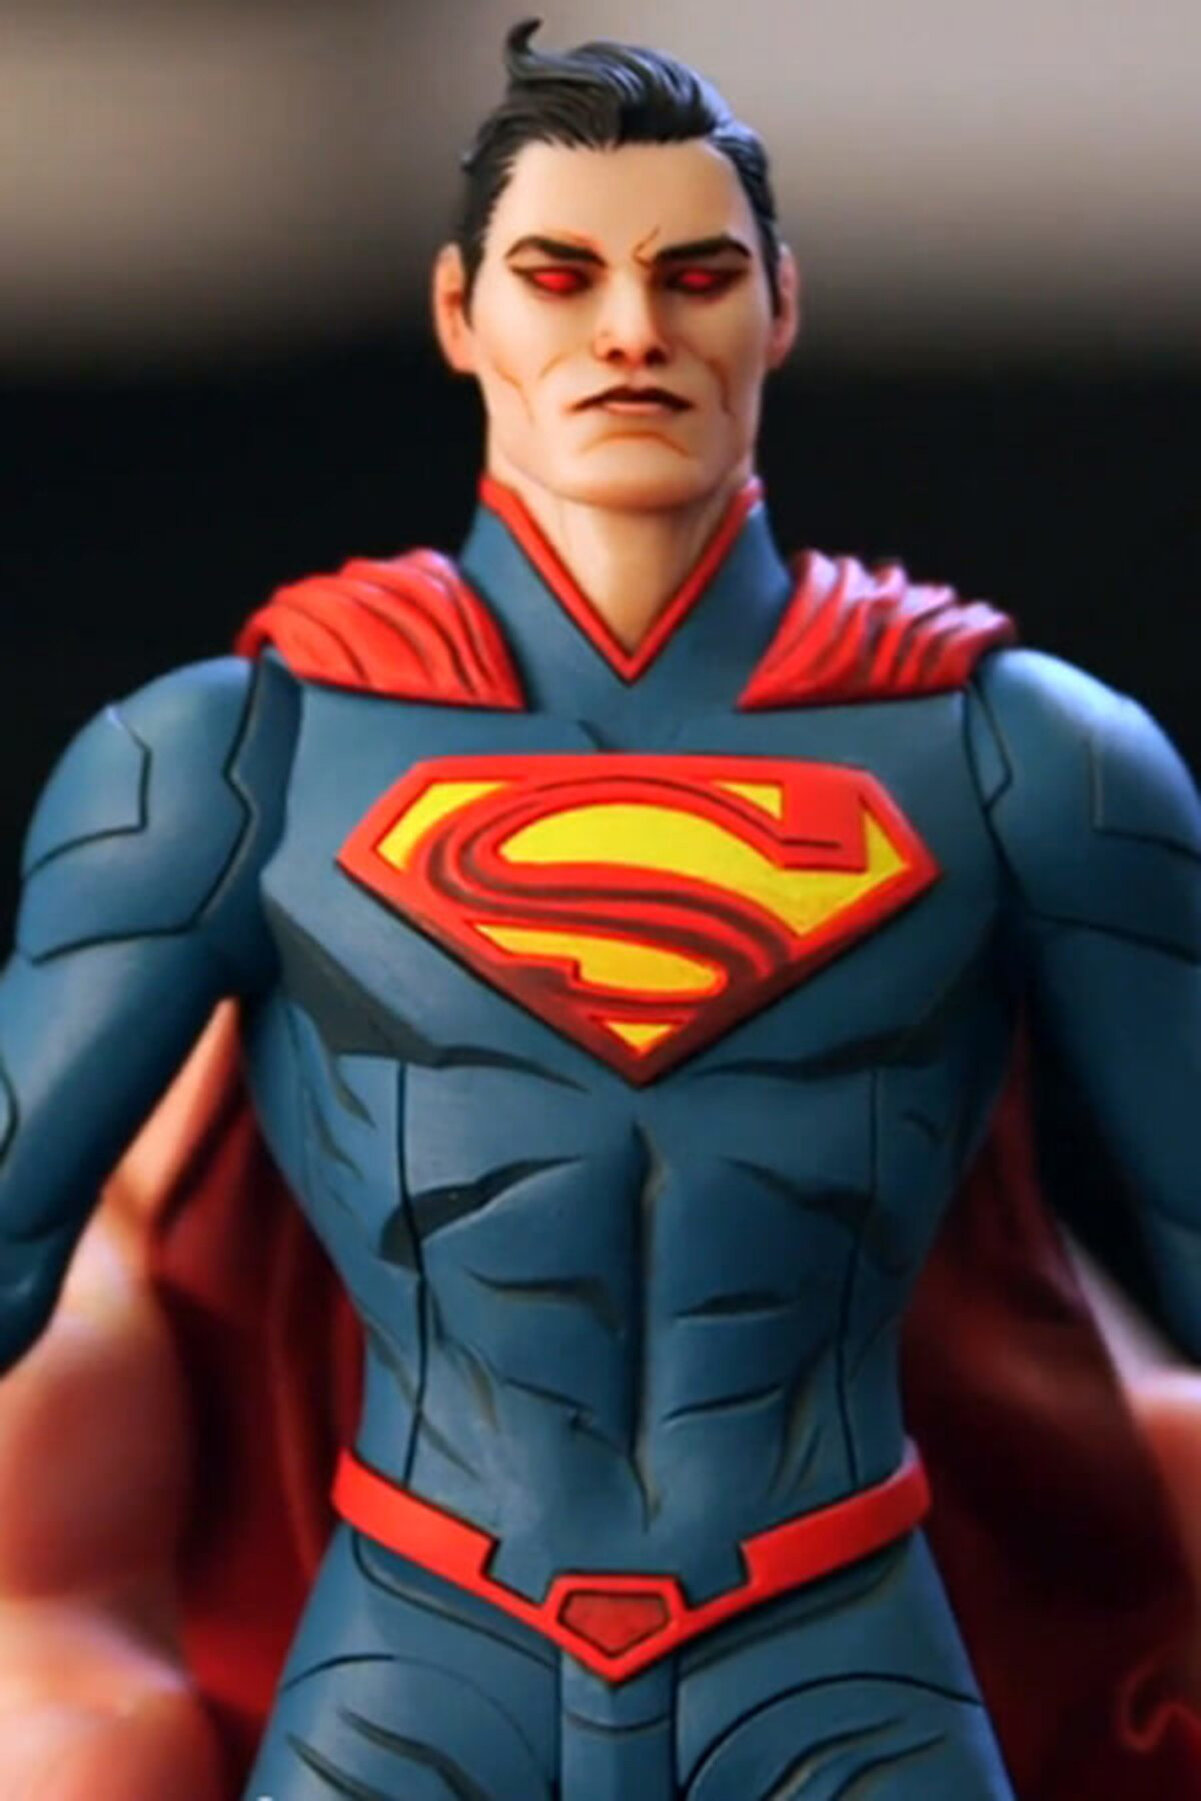 DC Collectibles Designer Action Figure Series 1 Superman by Jae Lee Action Figure